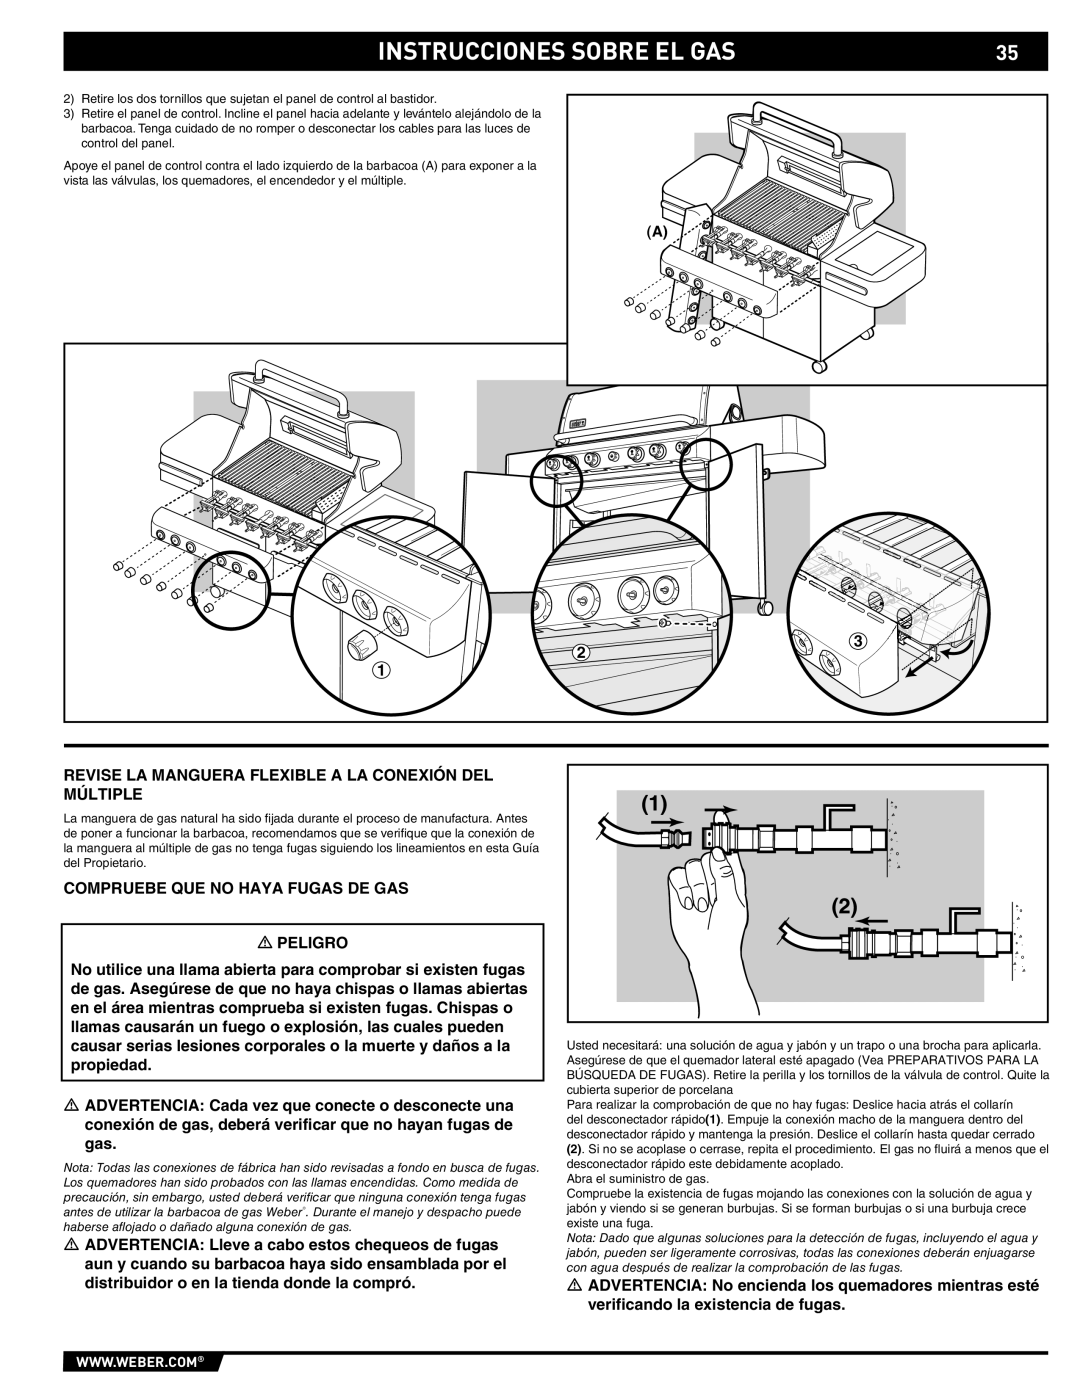 Weber S-470TM manual Instrucciones Sobre El Gas, Revise La Manguera Flexible A La Conexión Del Múltiple 